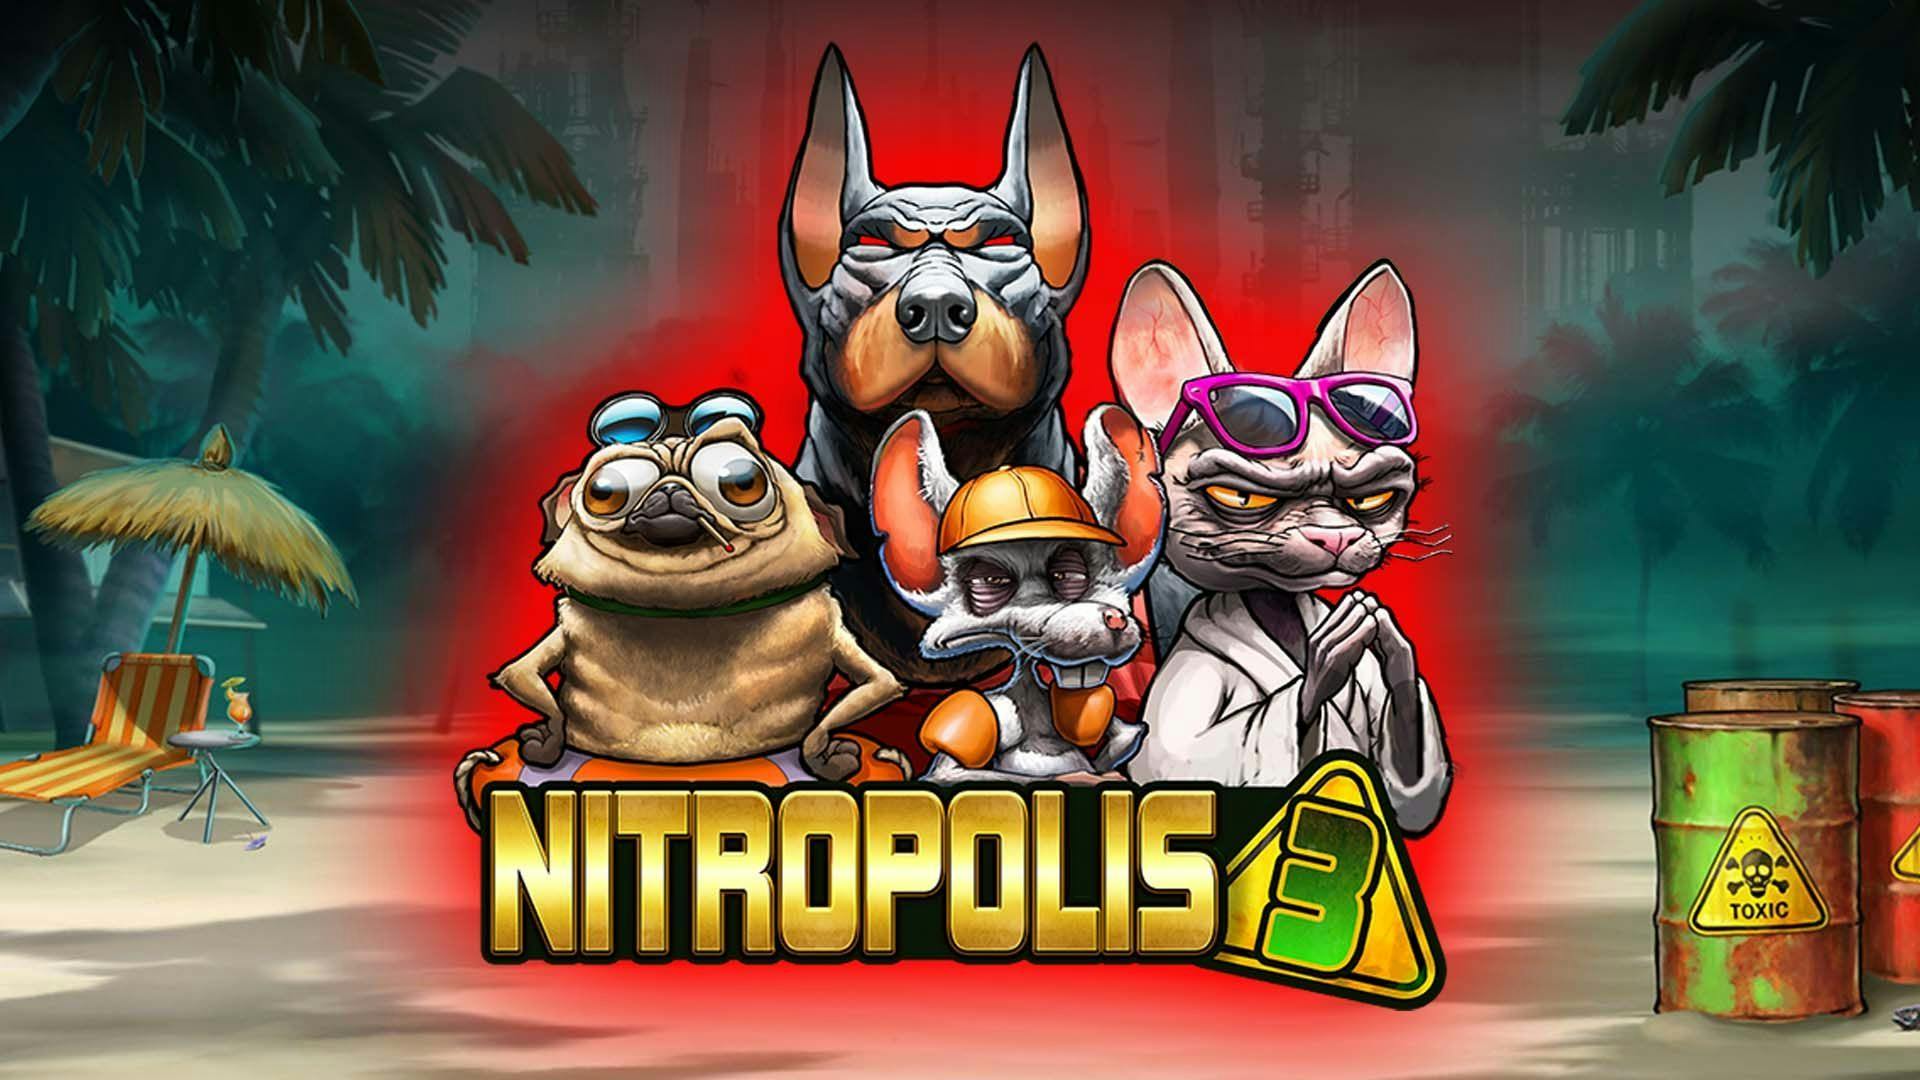 Nitropolis 3 Slot Machine Online Free Game Play